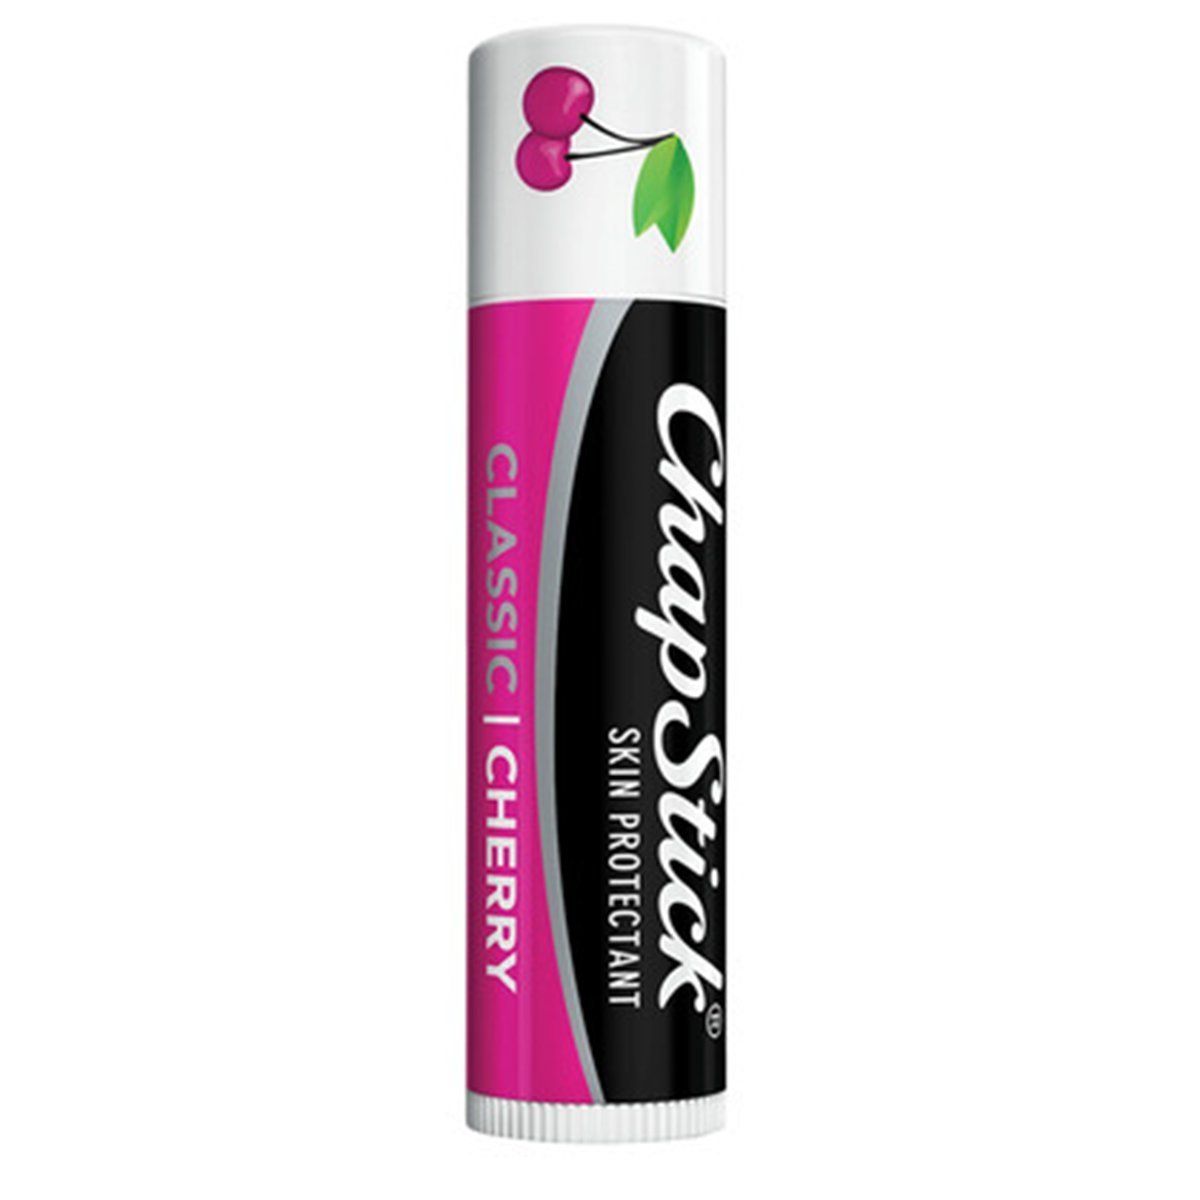 ChapStick Lip Balm Cherry 0.45 oz (Pack of 3) - image 2 of 8